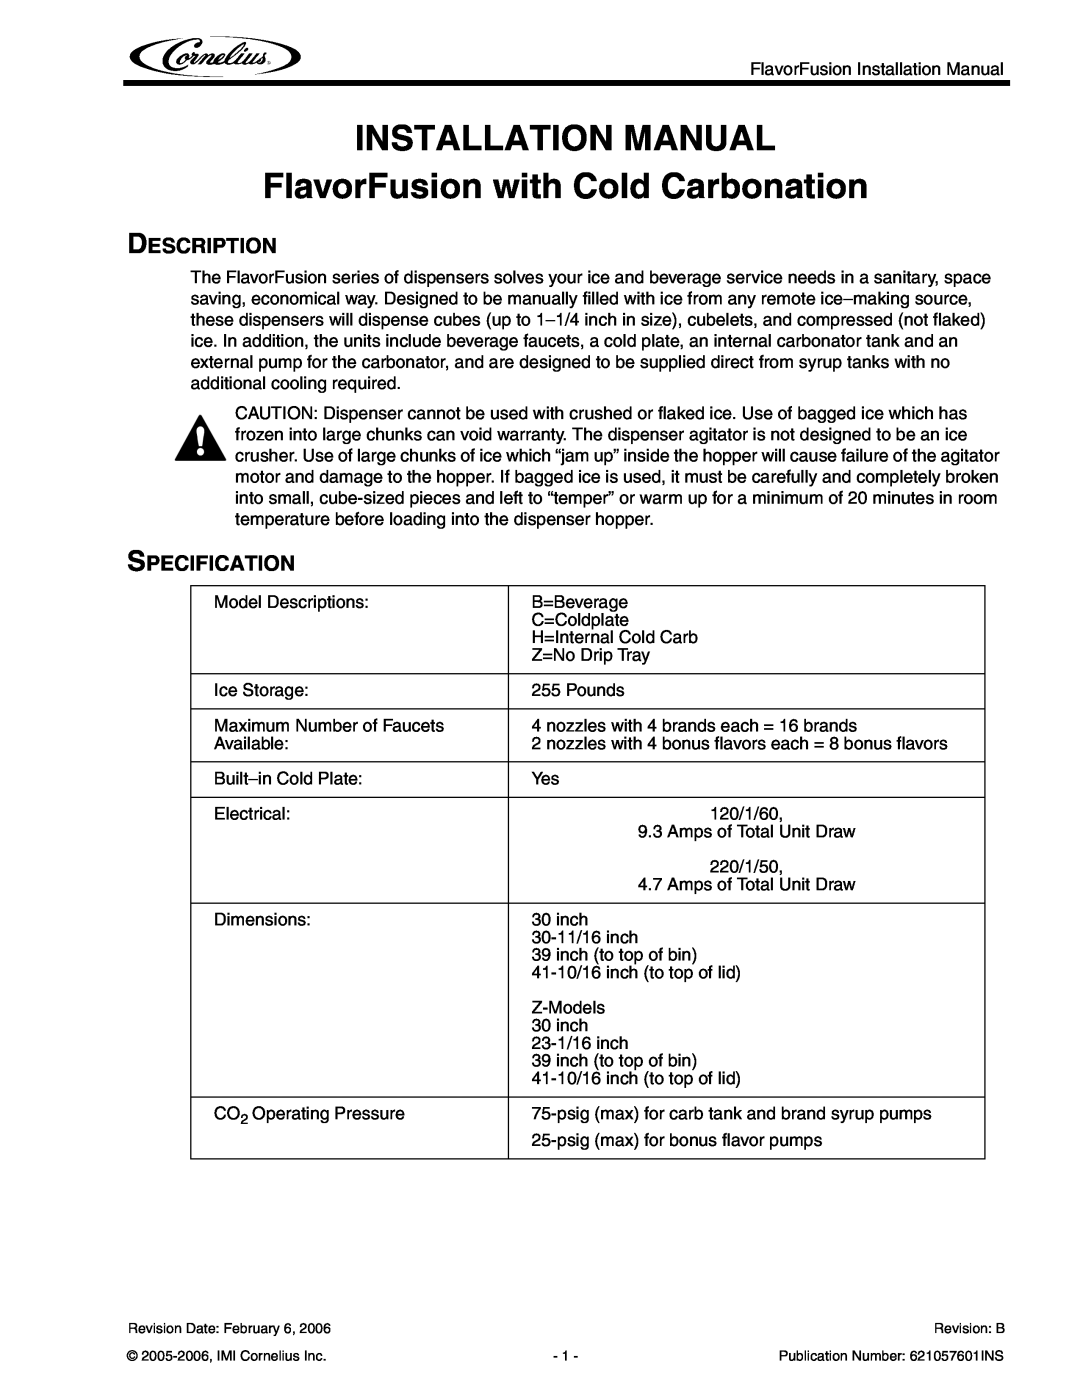 Cornelius FlavorFusion Series installation manual Description, Specification 